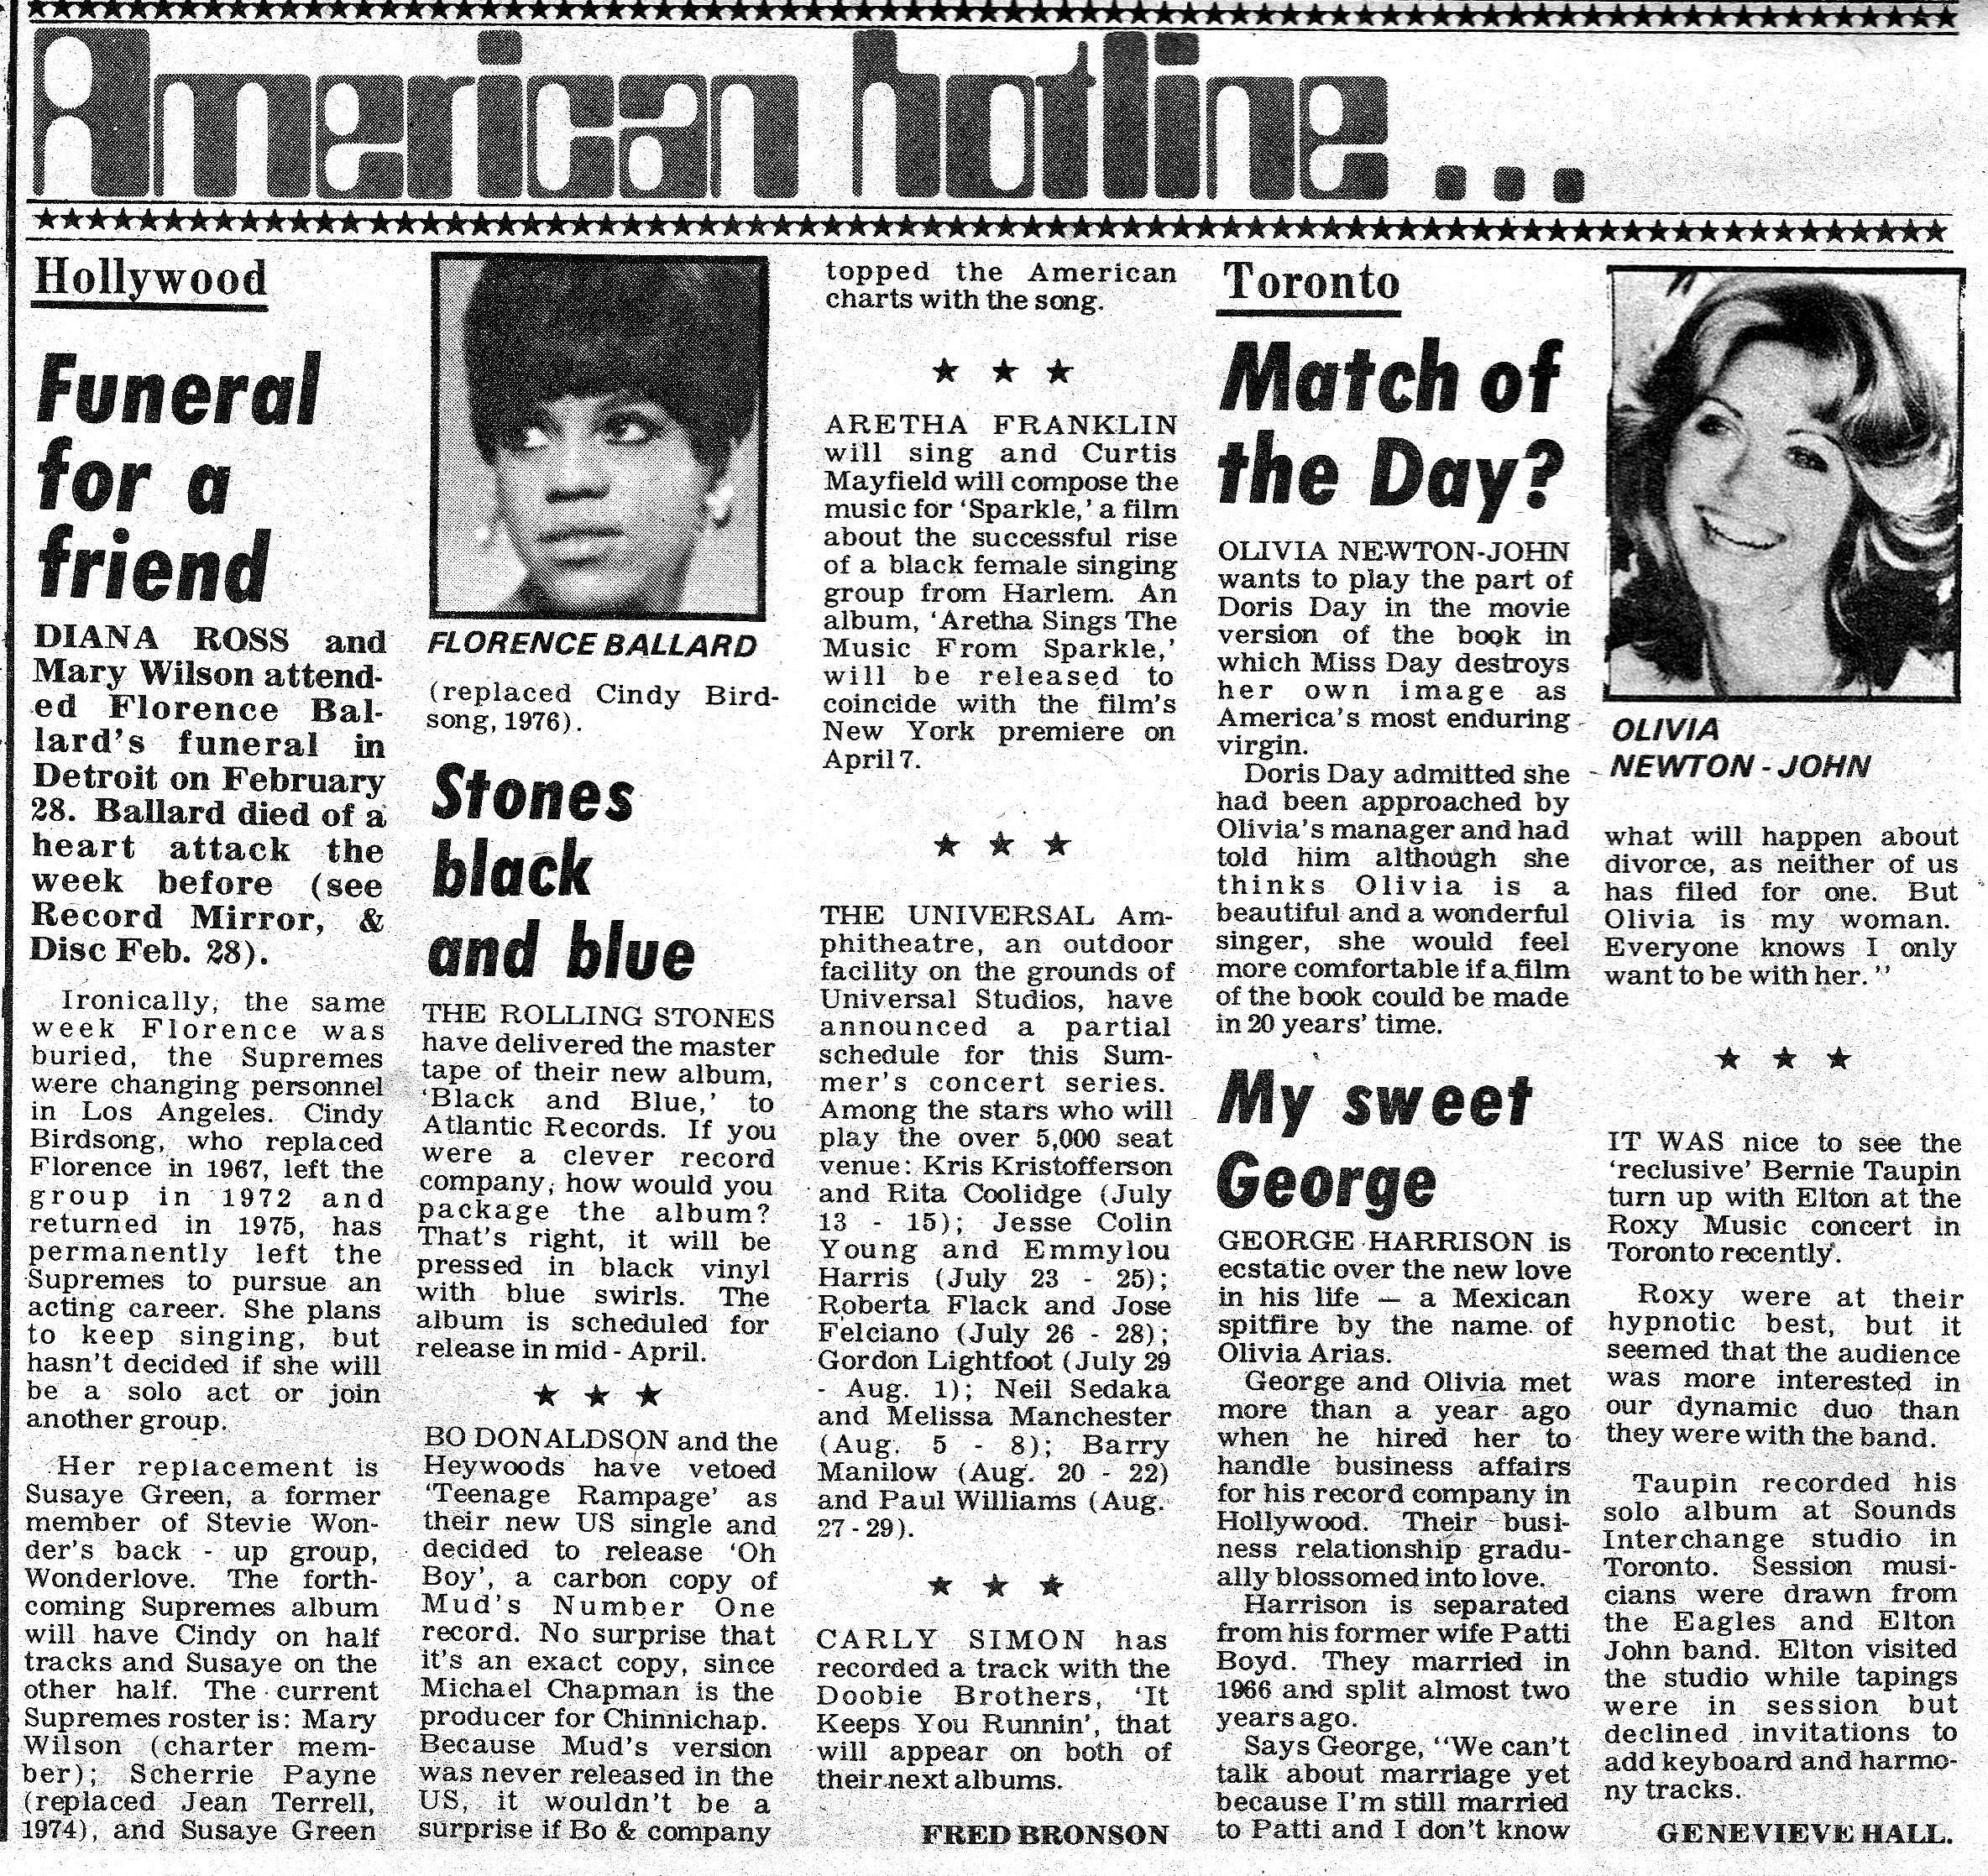 America hotline (Olivia investigates playing Doris Day in a biopic) - Record Mirror